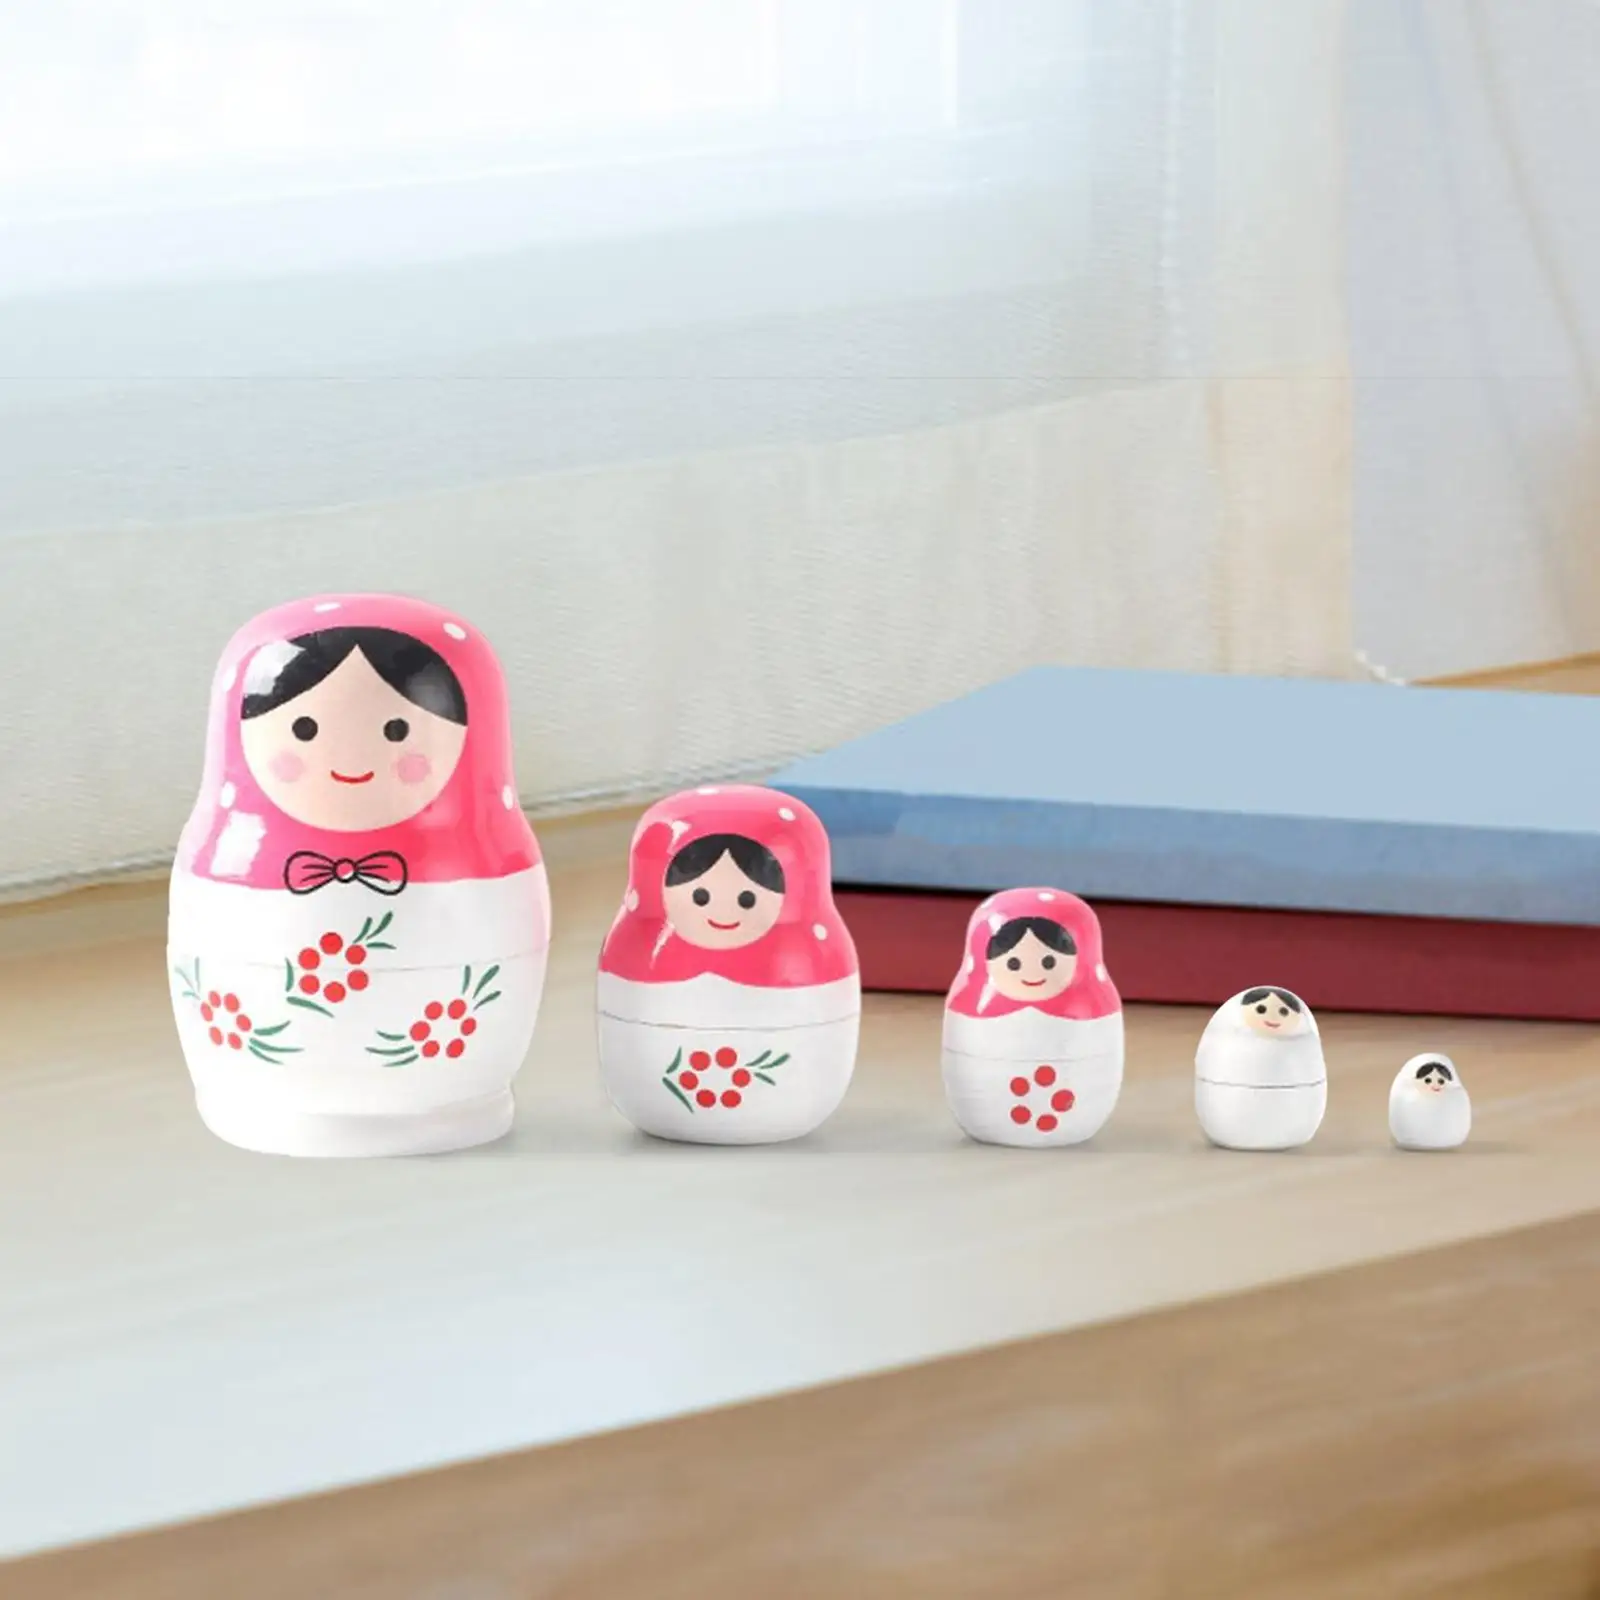 5 Pieces Wood Russian Nesting Dolls Nested Toy Handmade Matryoshka Dolls for Halloween Desktop Office Decor Birthday Gift